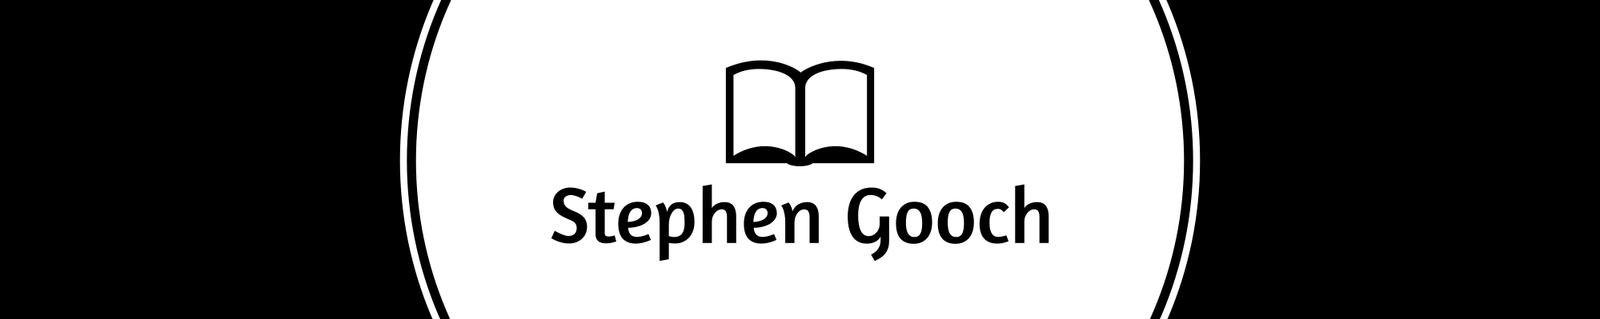 Stephen Gooch